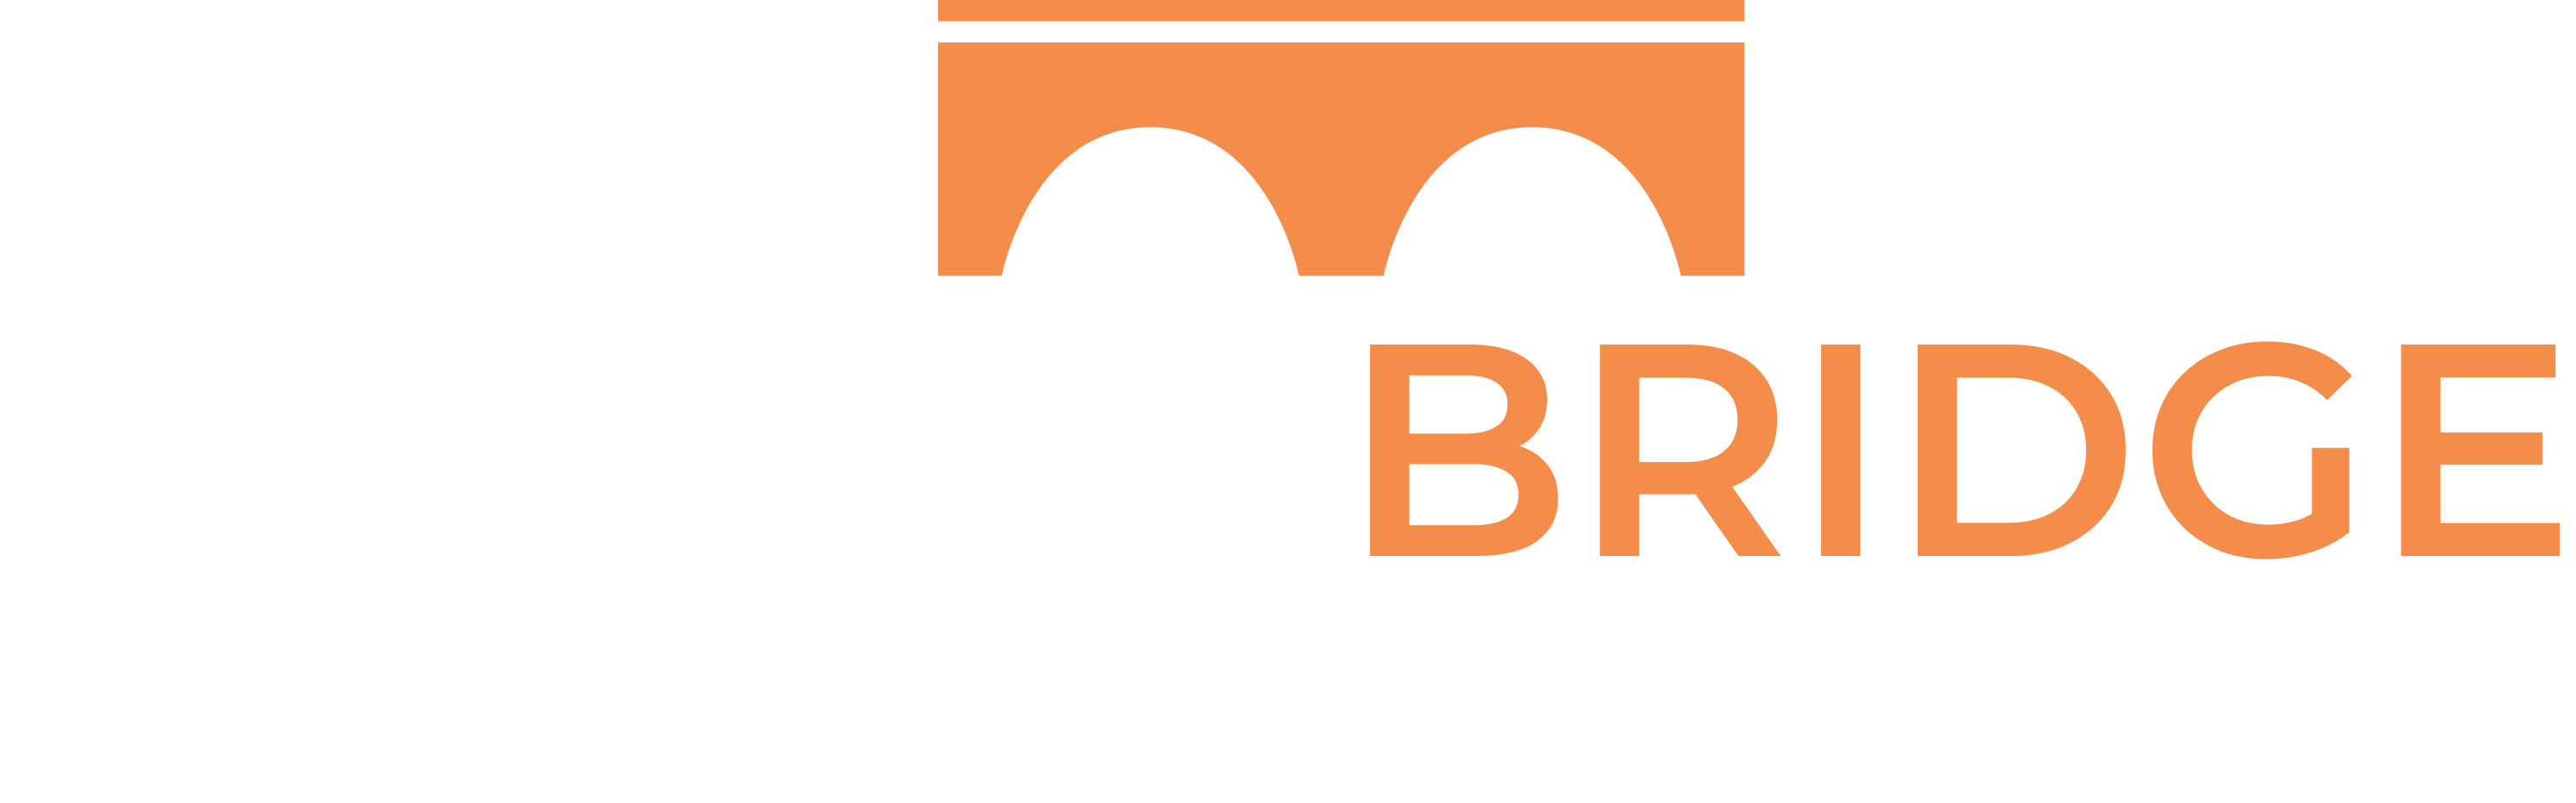 MarketBridge Partners Logo